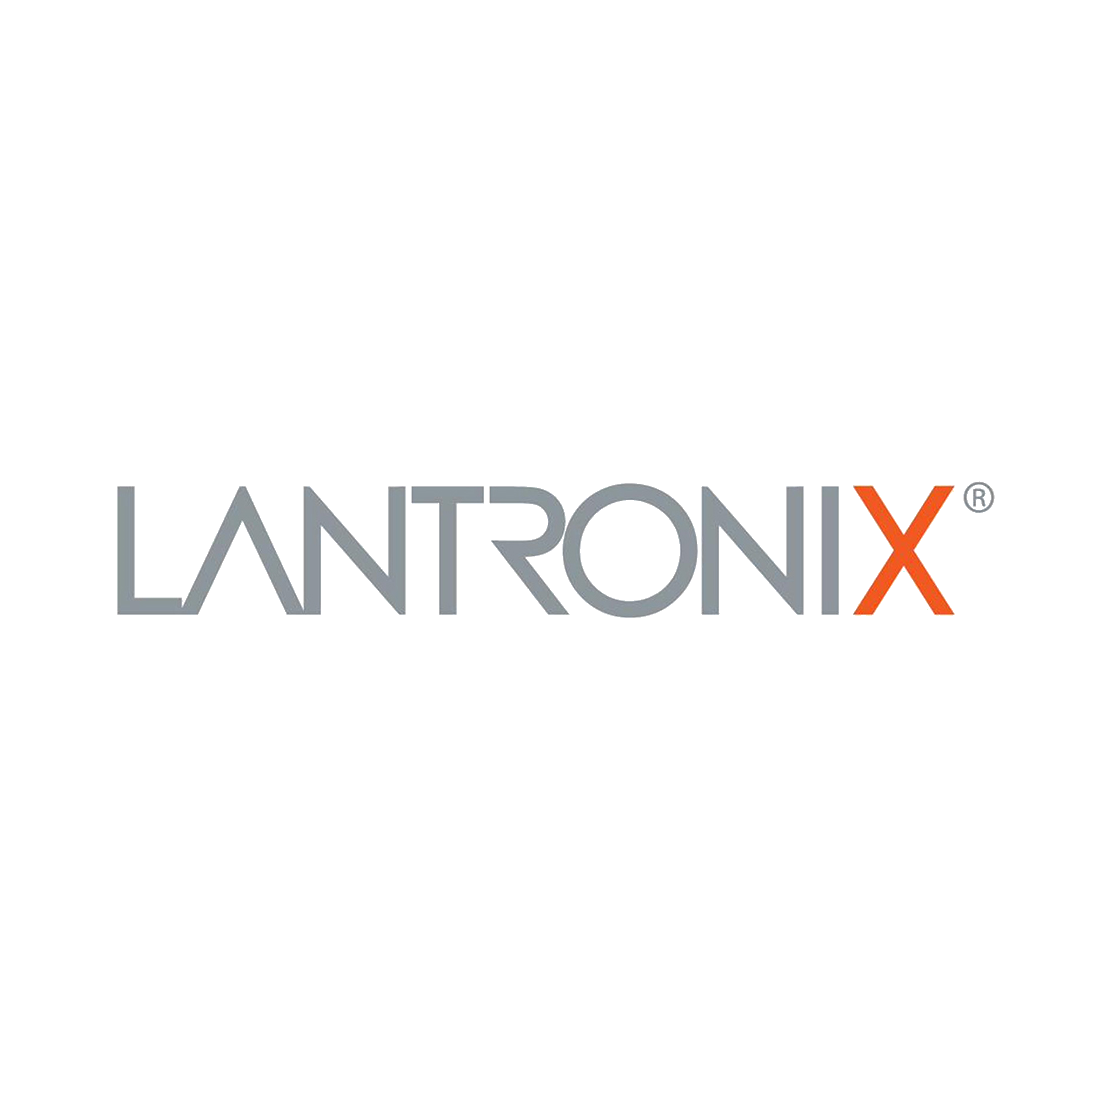 Lantronix SLC 8000 56K V.92 Internal Modem